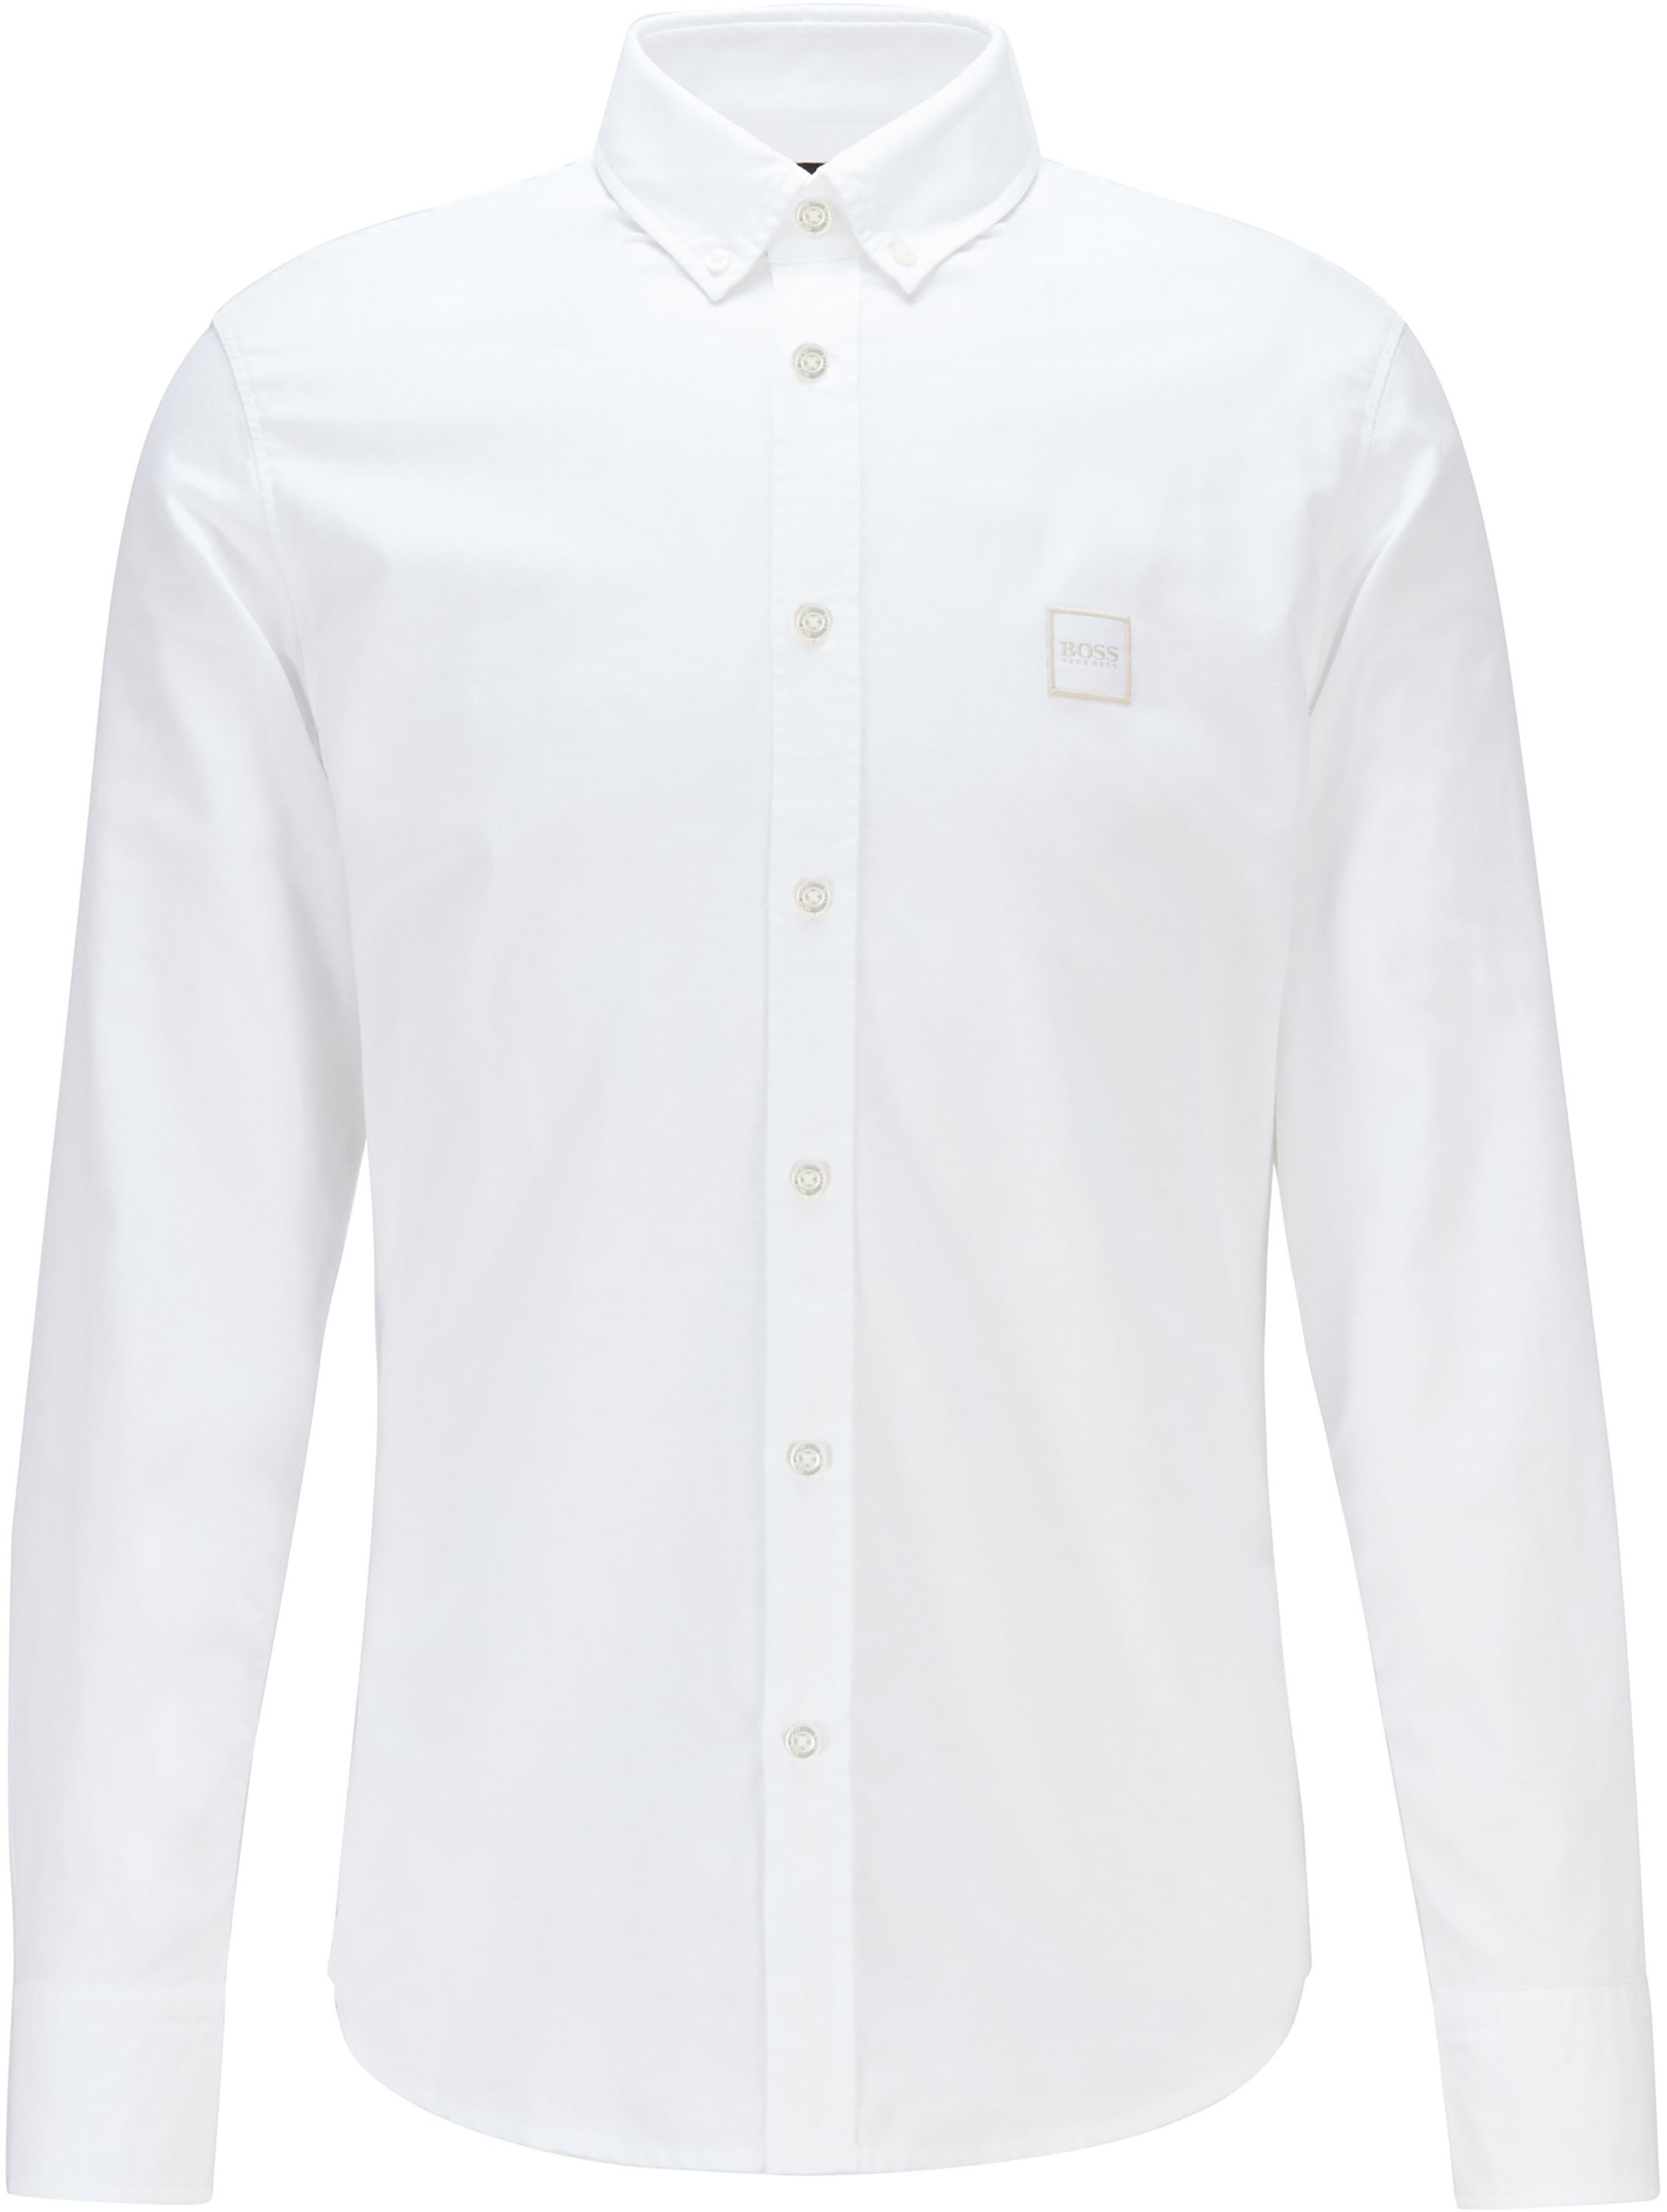 Hugo Boss Shirt Mabsoot White size M